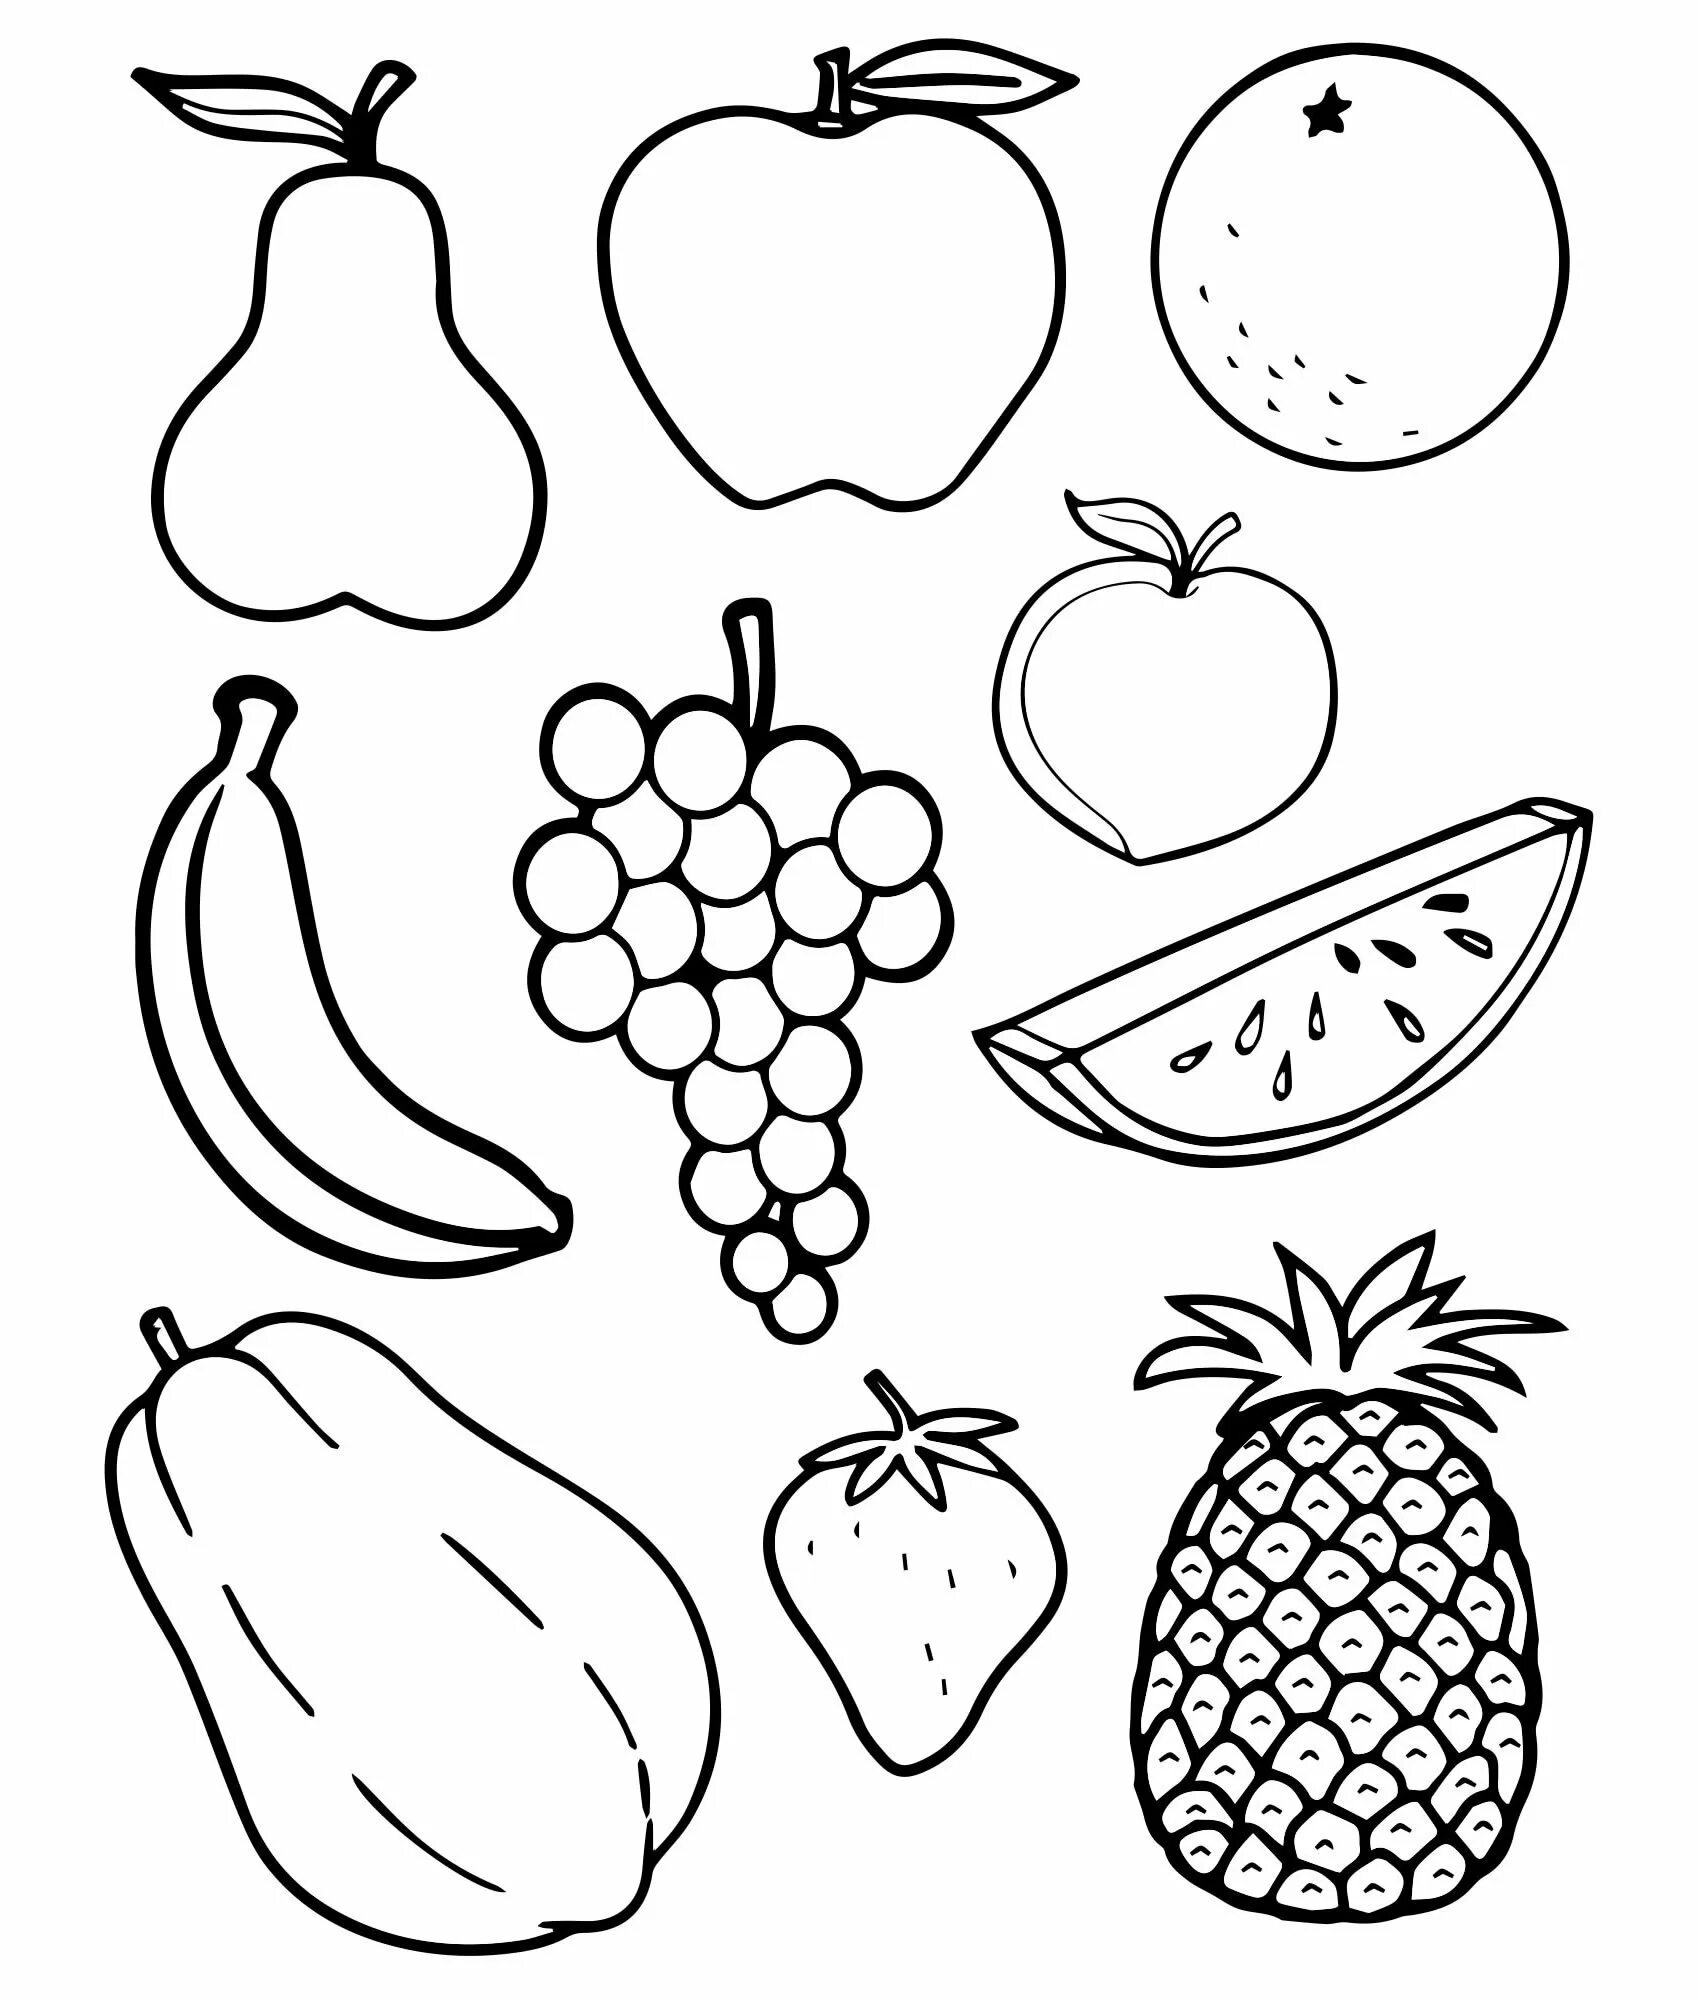 Fruit pattern #2